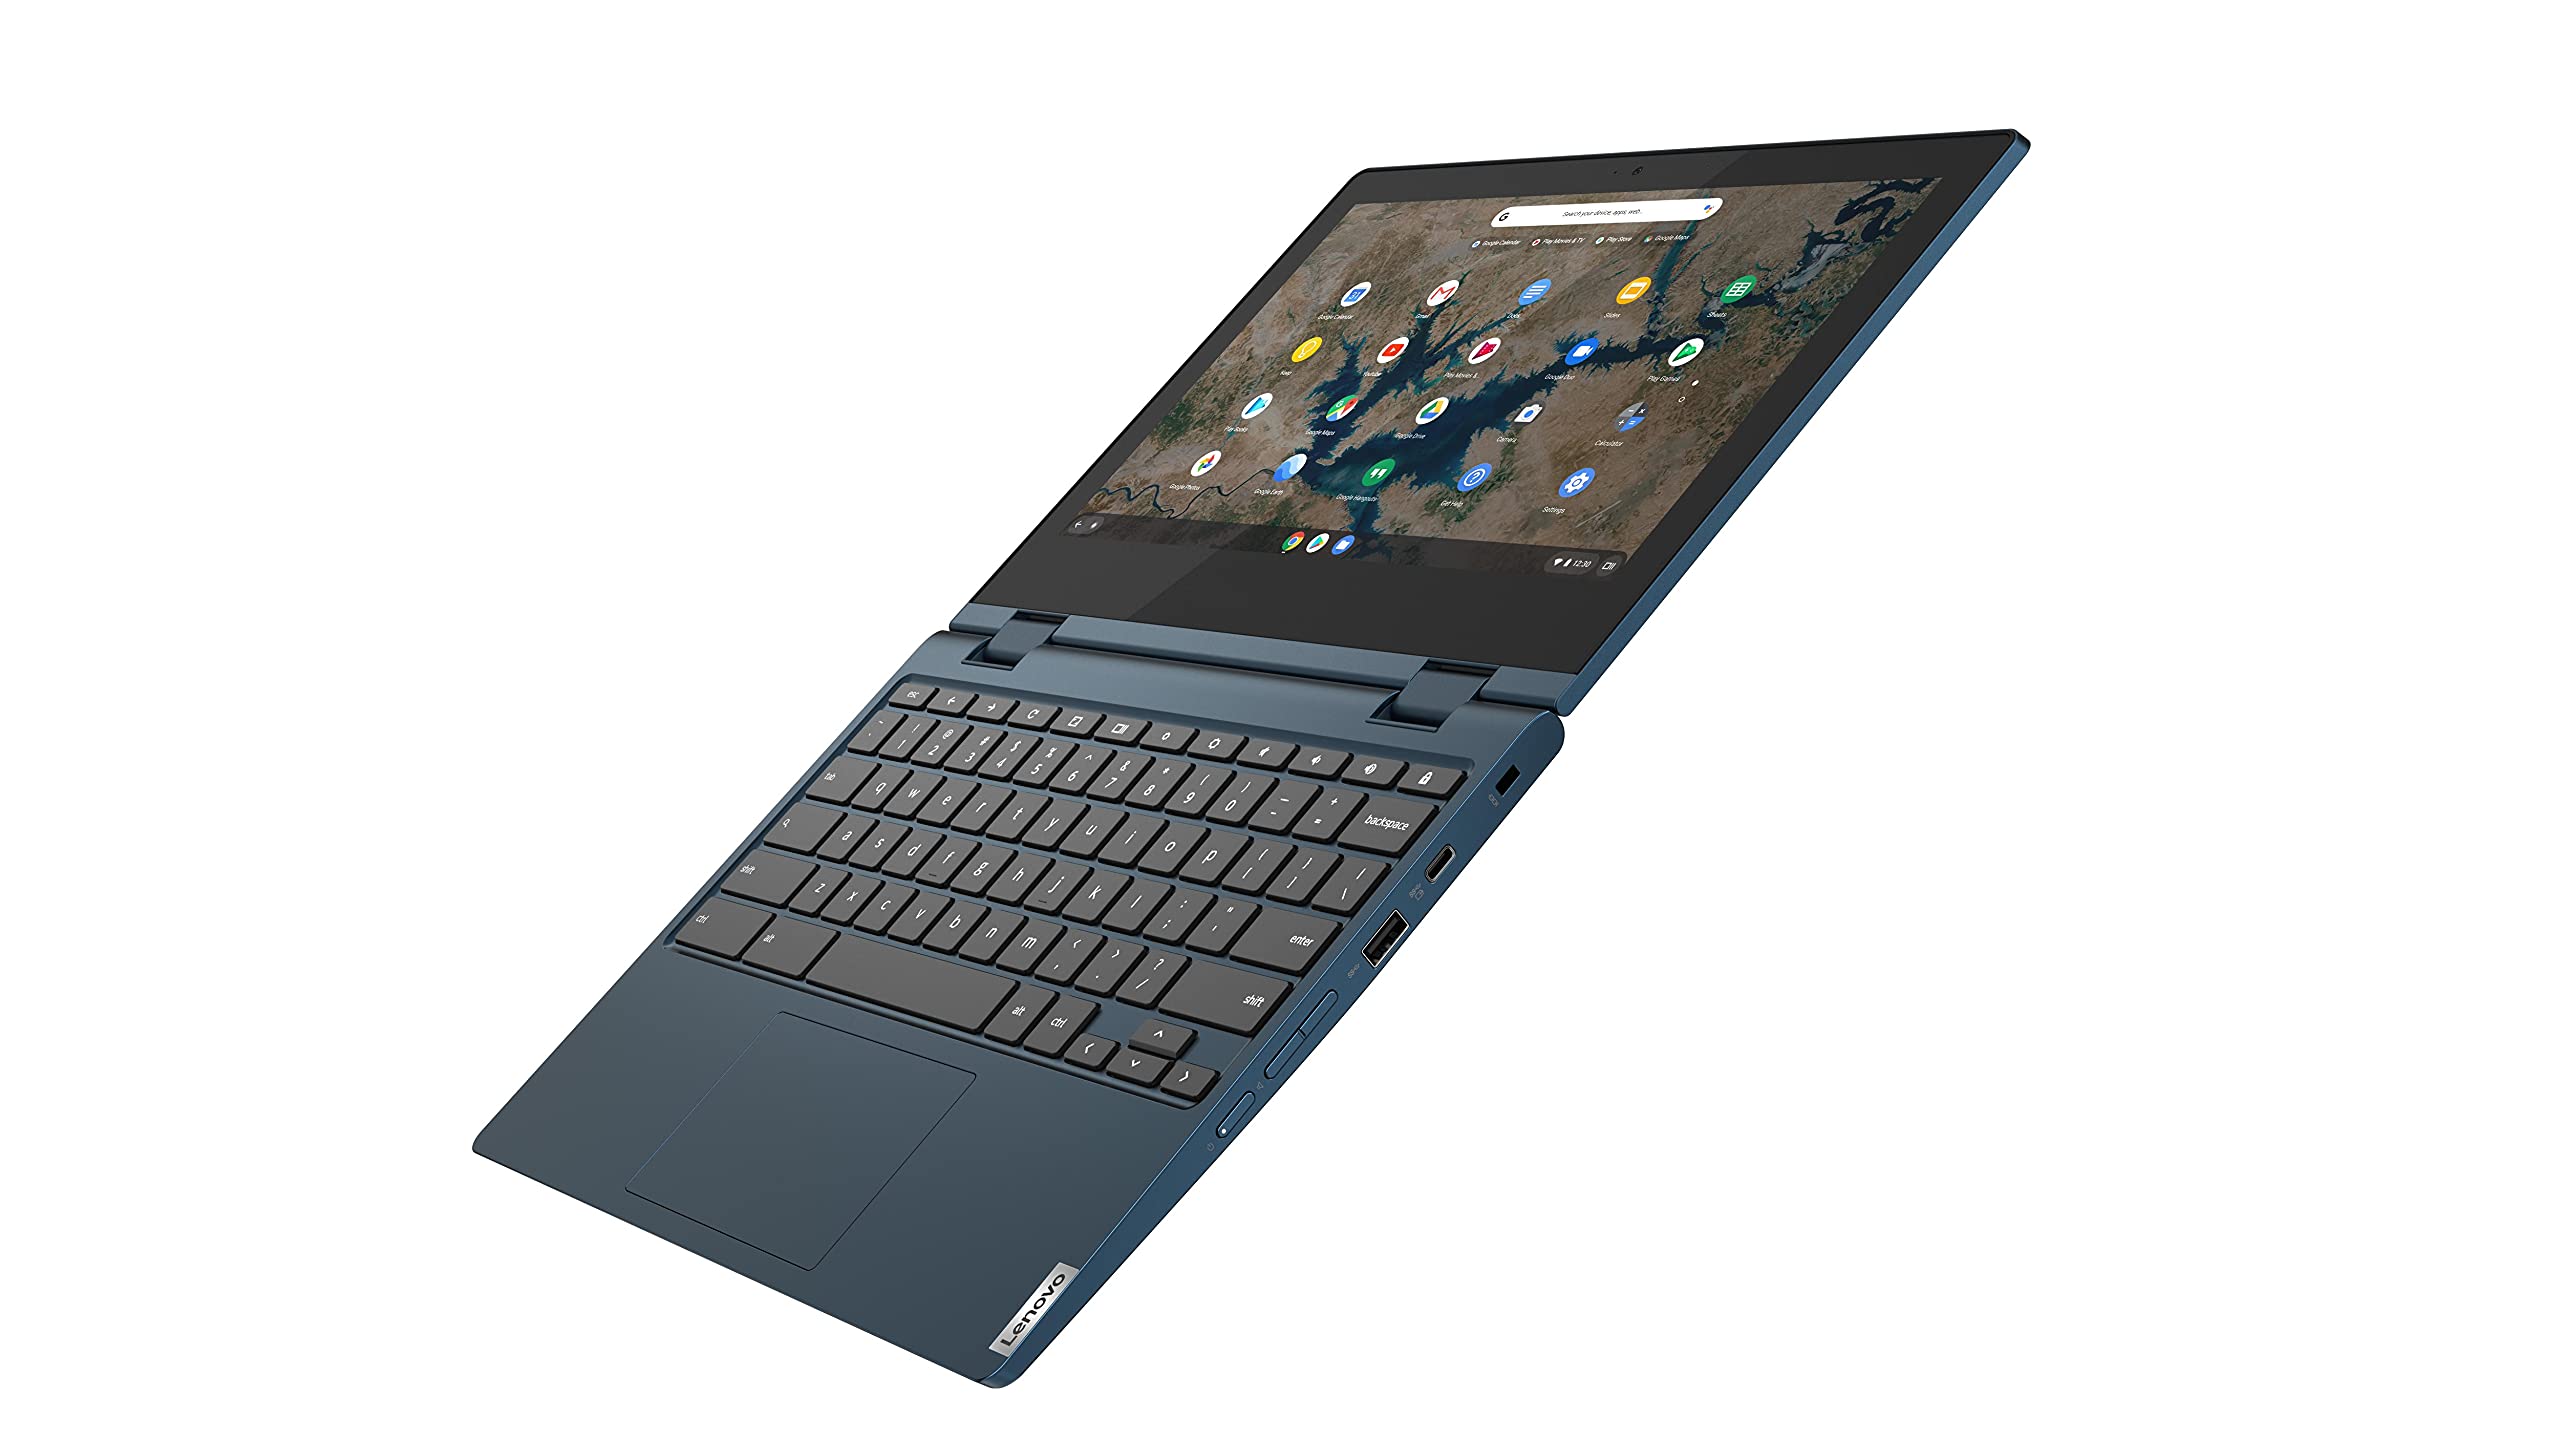 Lenovo Chromebook Flex 3 11.6" HD Touchscreen 2-in-1 Laptop Computer PC, Intel Celeron N4020, 4GB DDR4, 32GB eMMC, Intel UHD 600, 802.11ac, Bluetooth, Webcam, Chrome OS, Blue, 64GB ABYS MicroSD Card